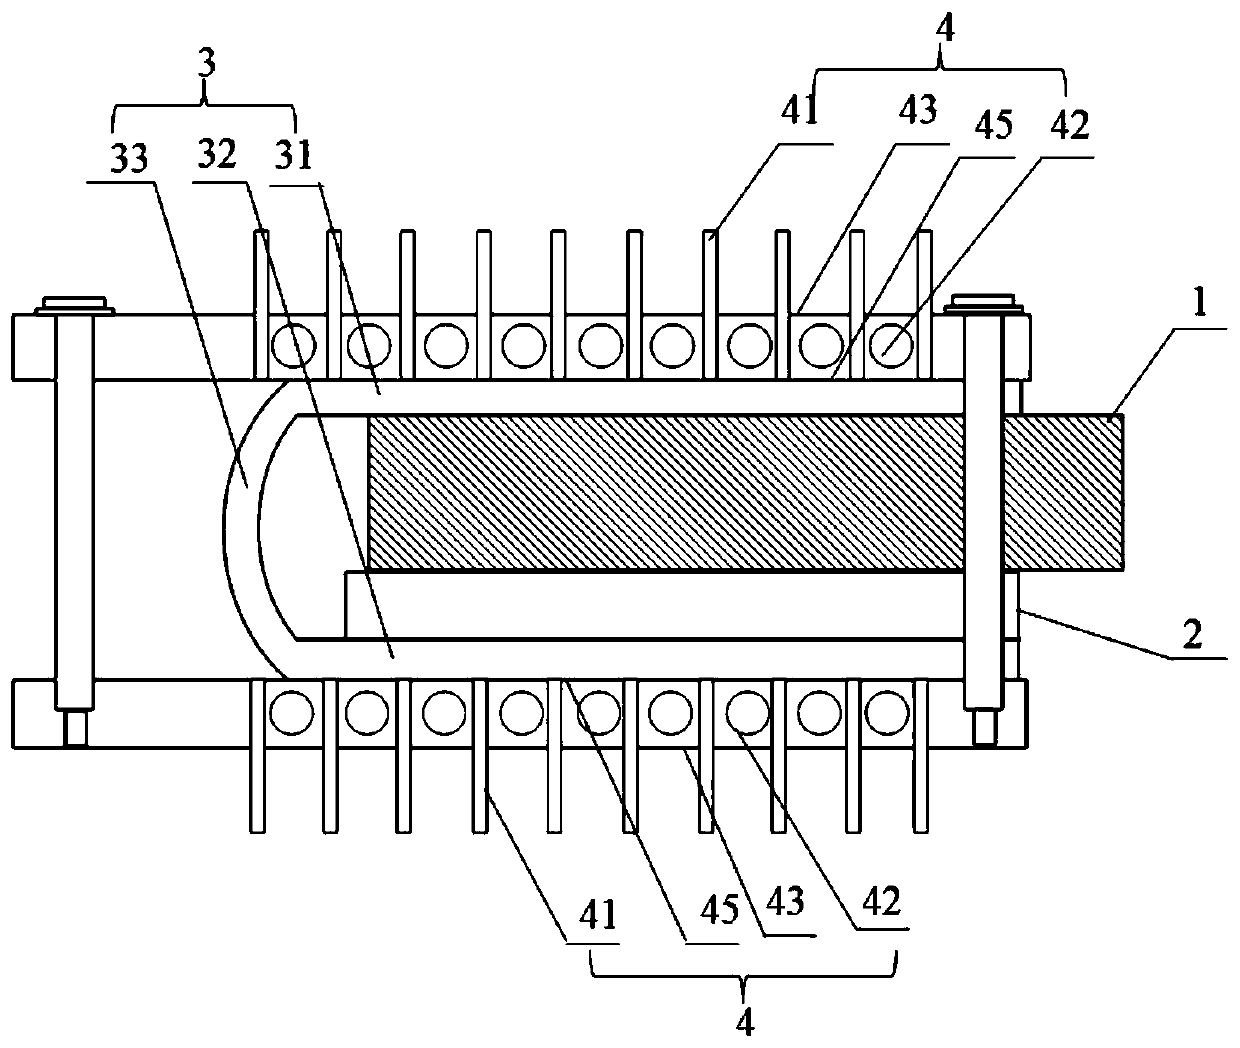 Optical module heat-dissipation structure